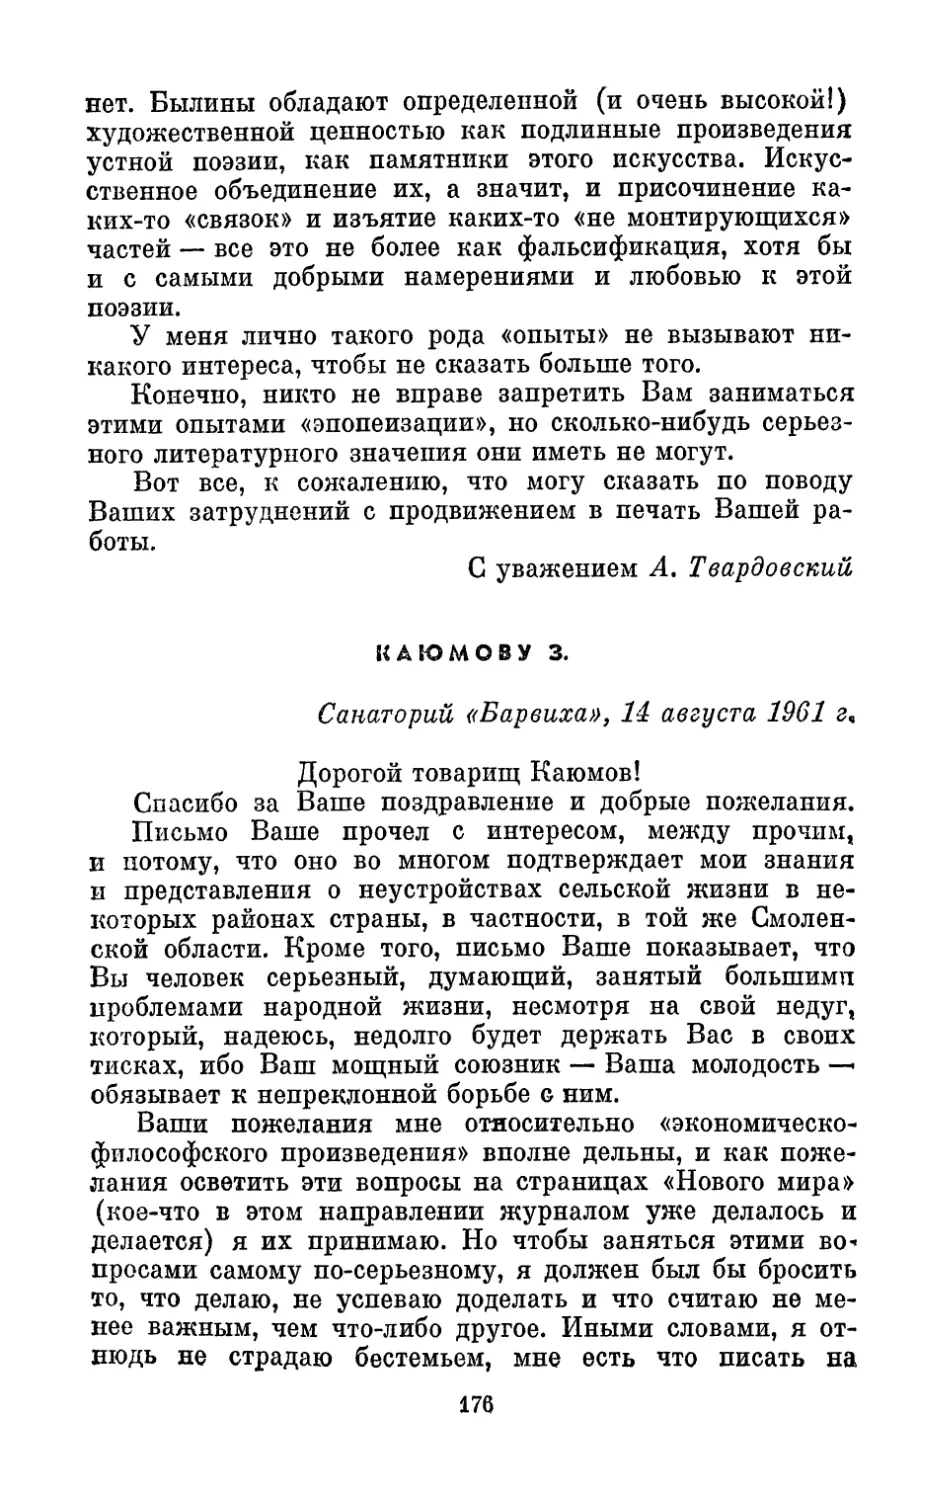 Каюмову З., 14 августа 1961 г.